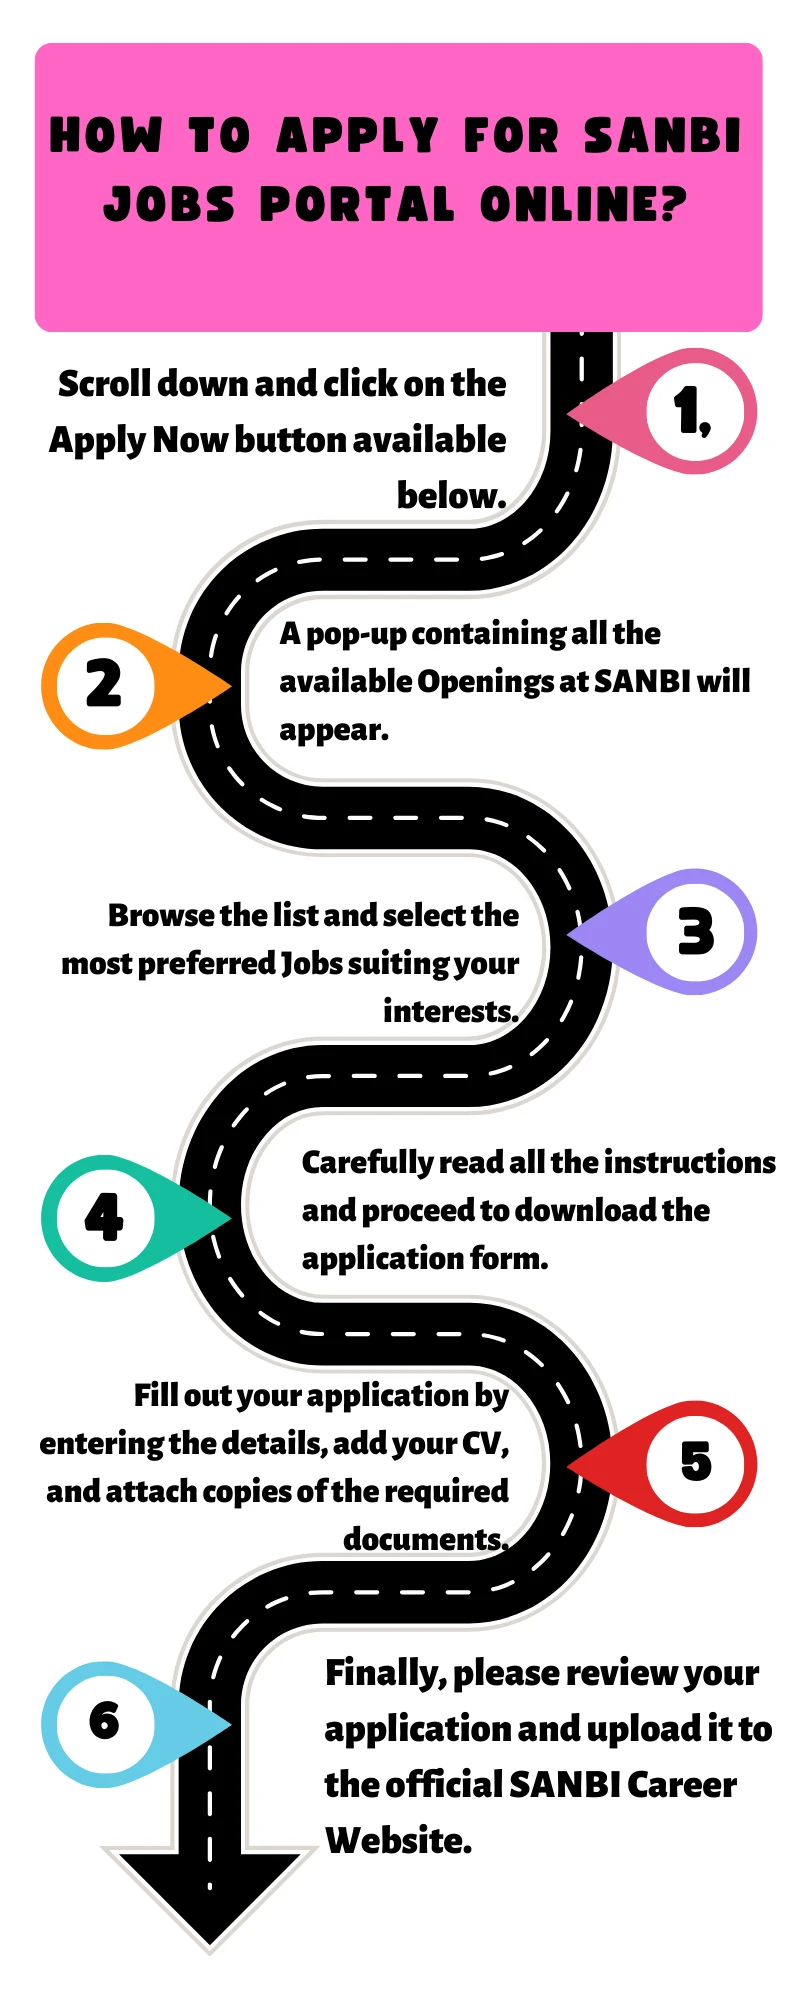 How To Apply for SANBI Jobs Portal Online?